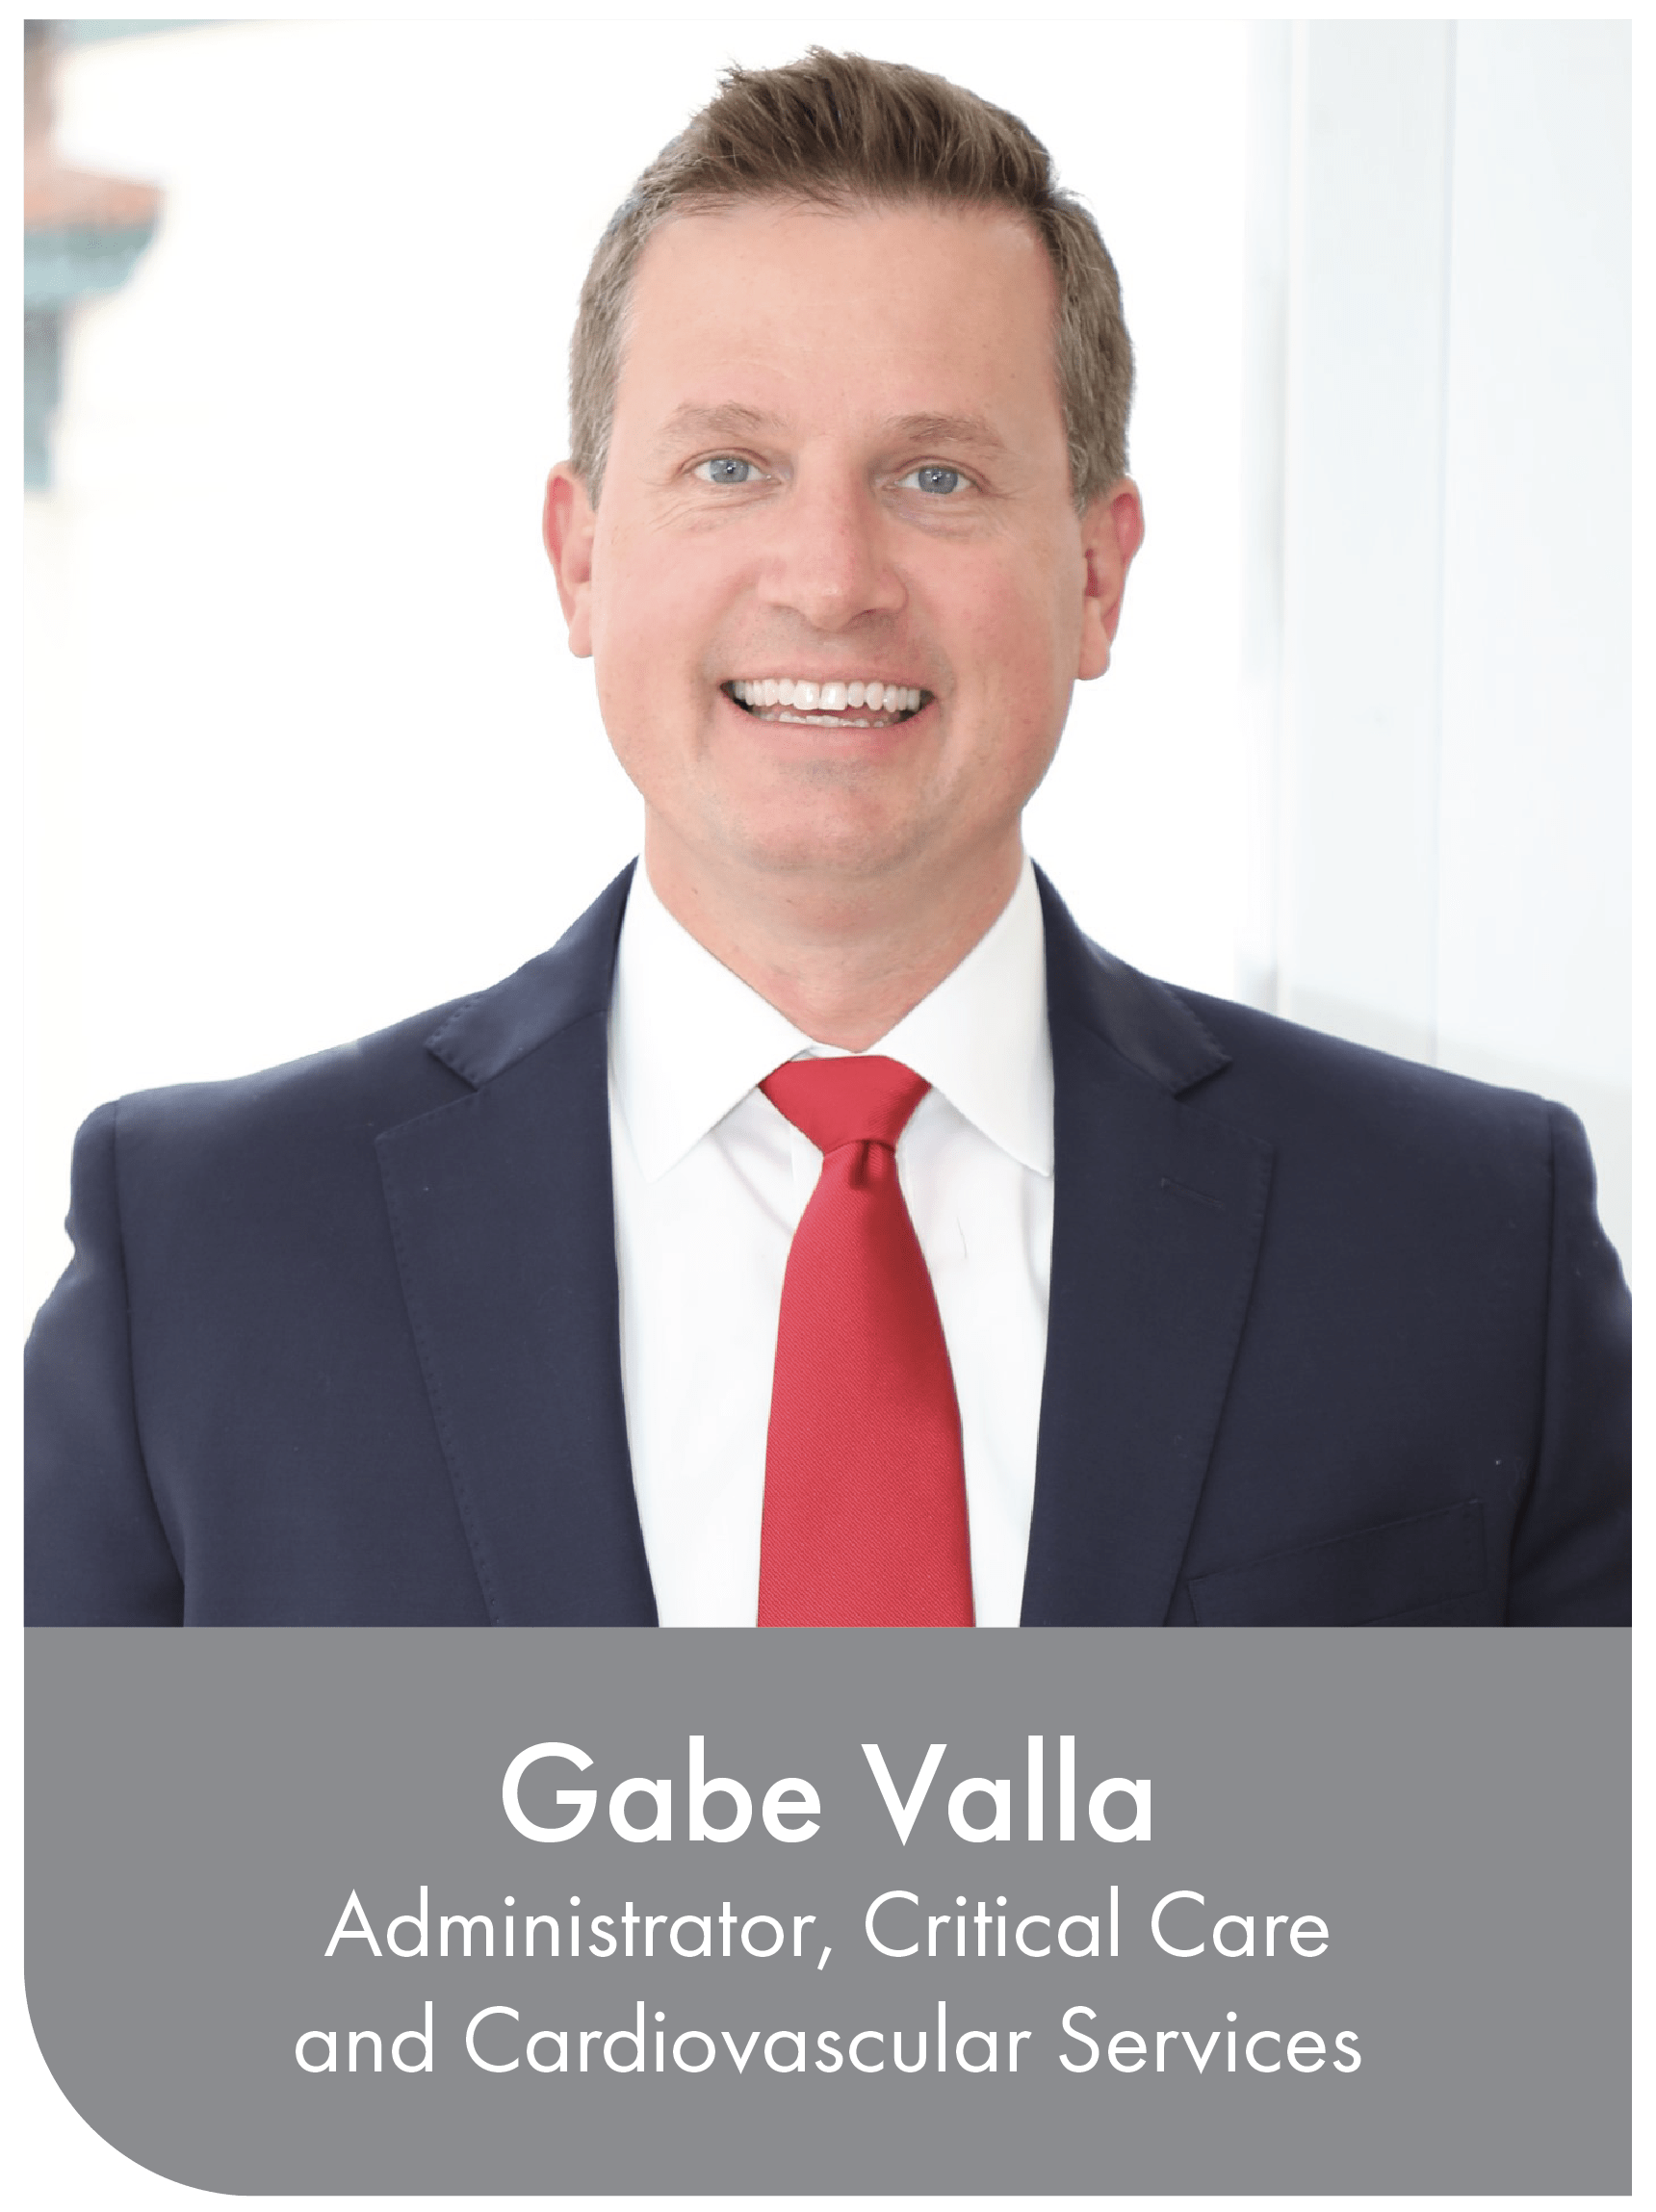 Gabe Valla, Administrator, Critical Care and Cardiovascular Services